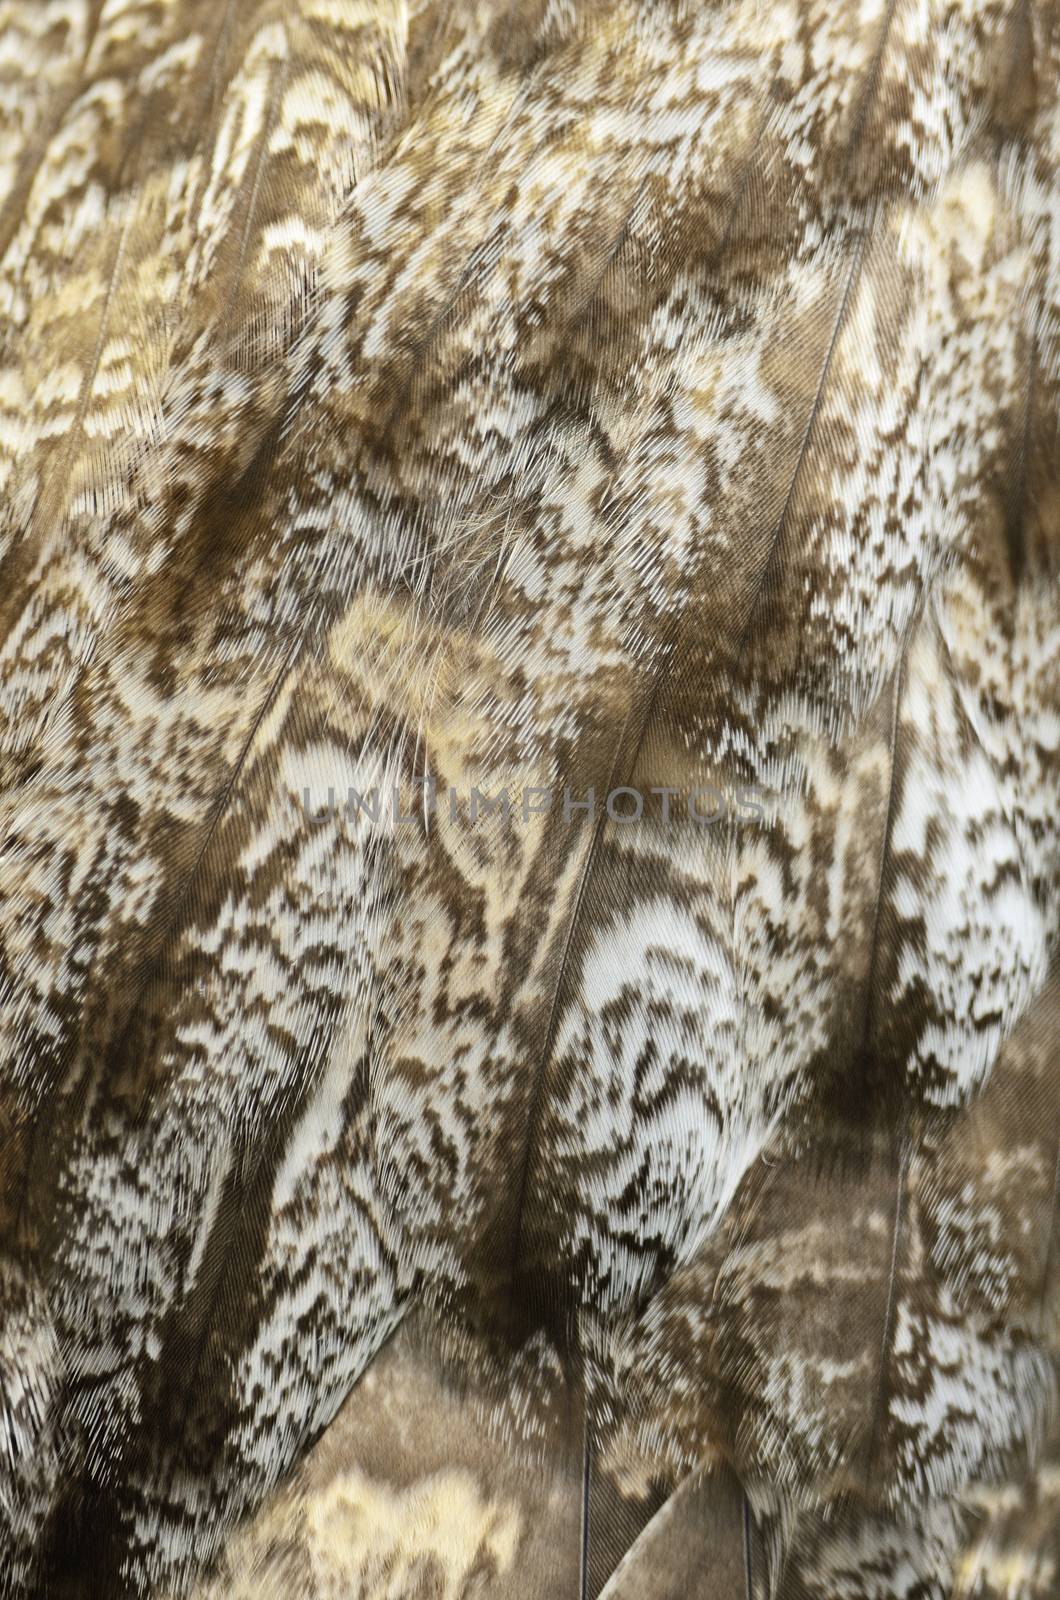 Closeup Great Grey Owl feathers 